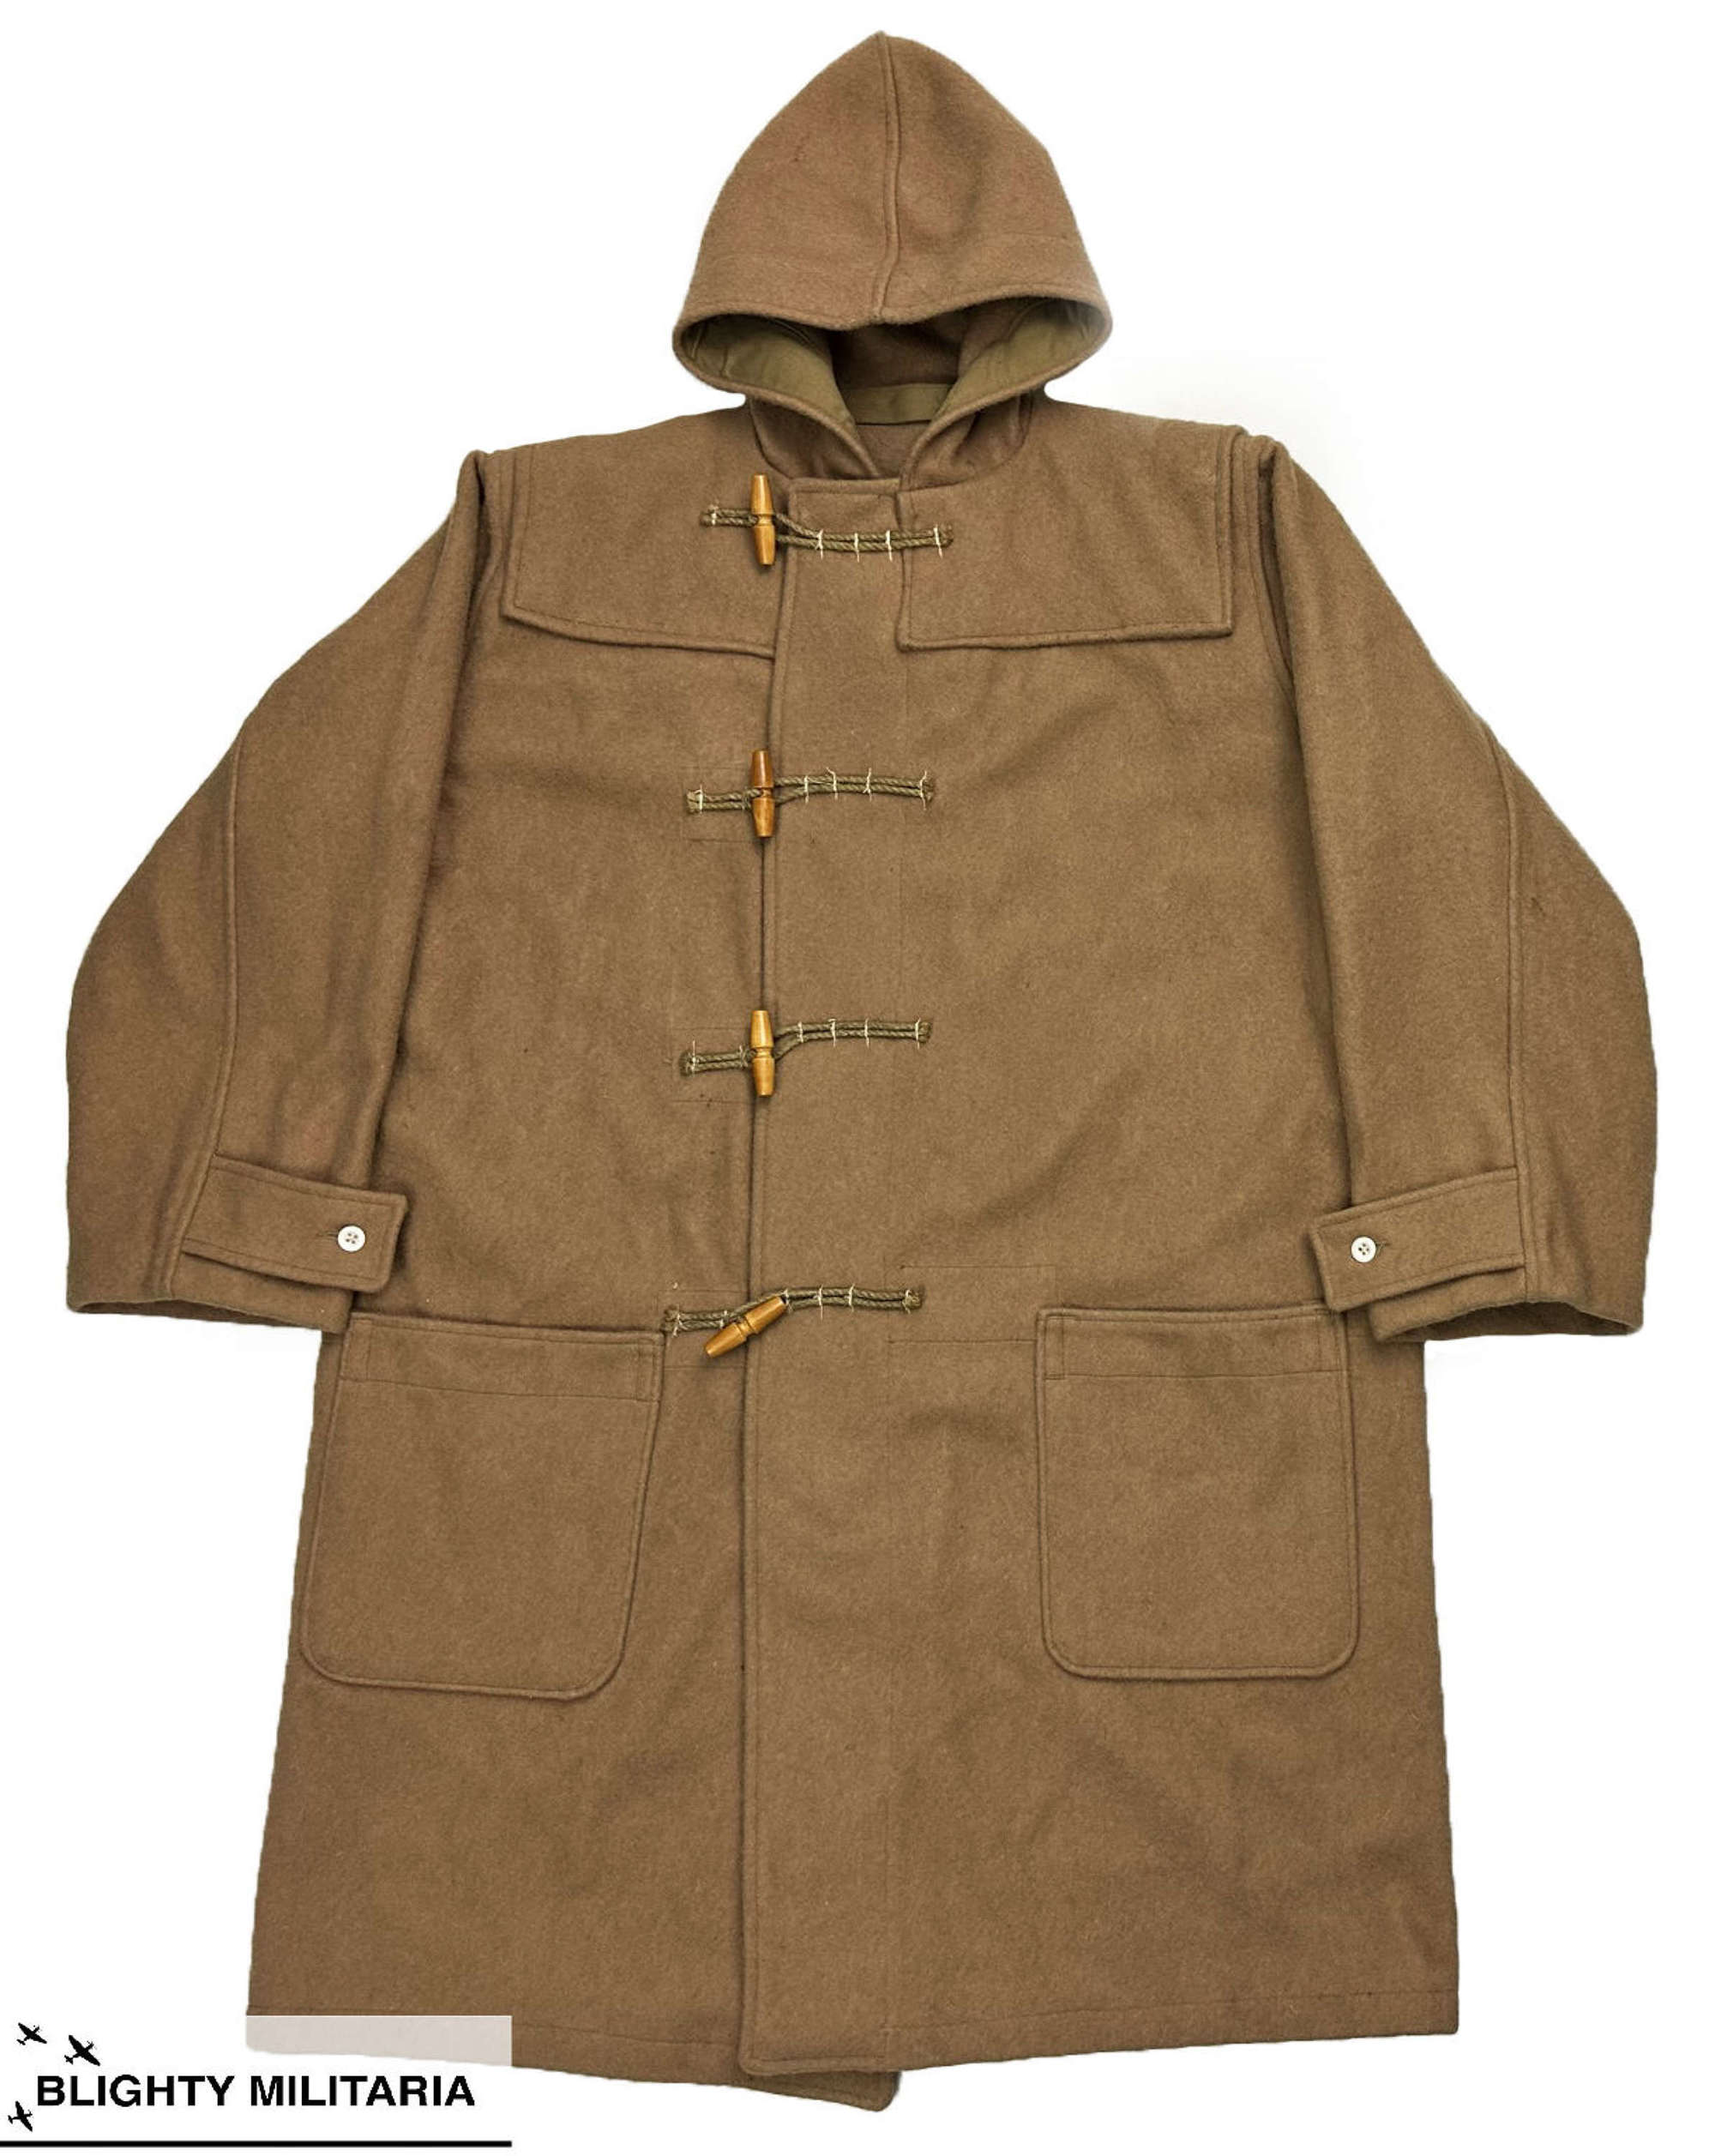 Original 1970s British Military Duffle Coat - Size 3